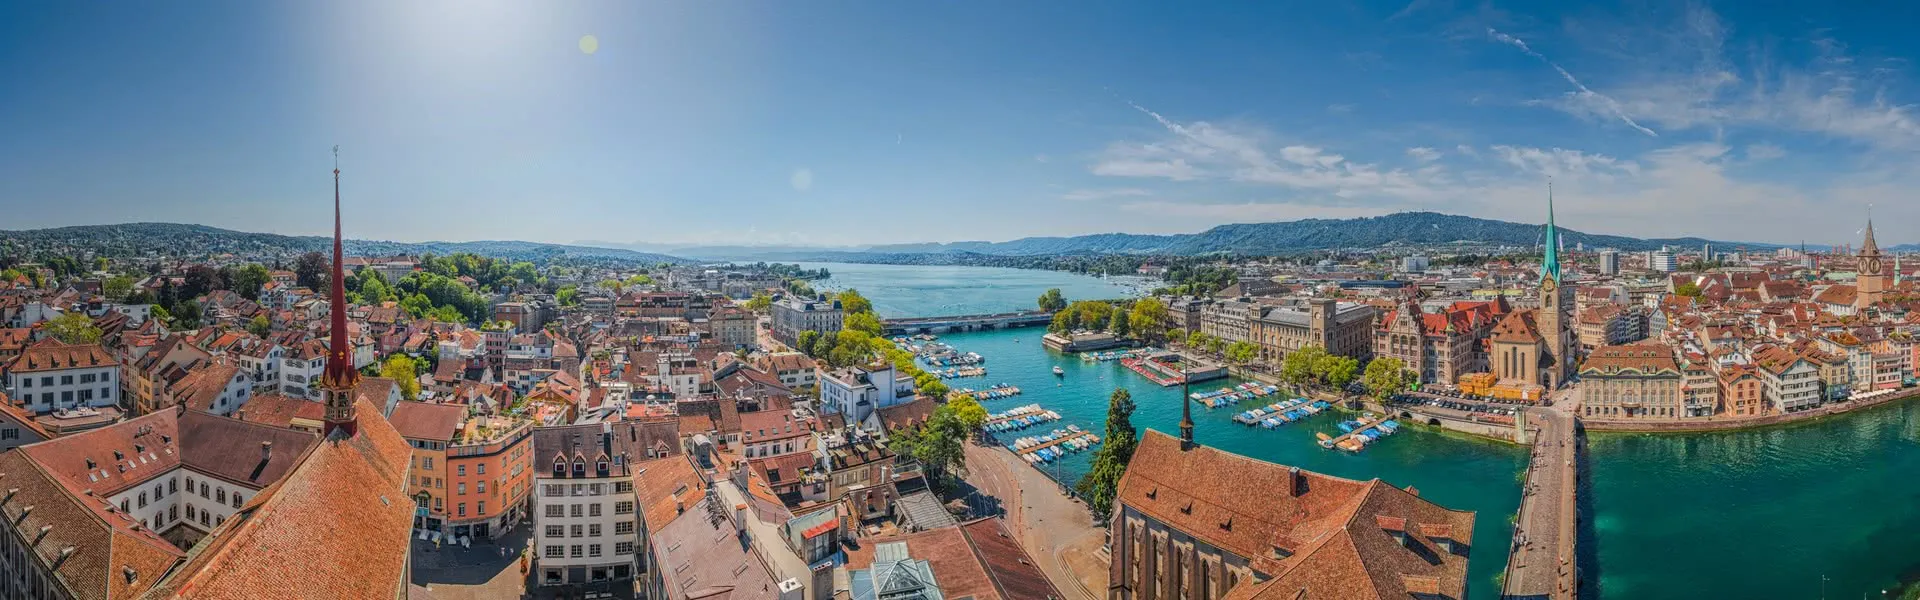 Zurich - the destination with youth hostels